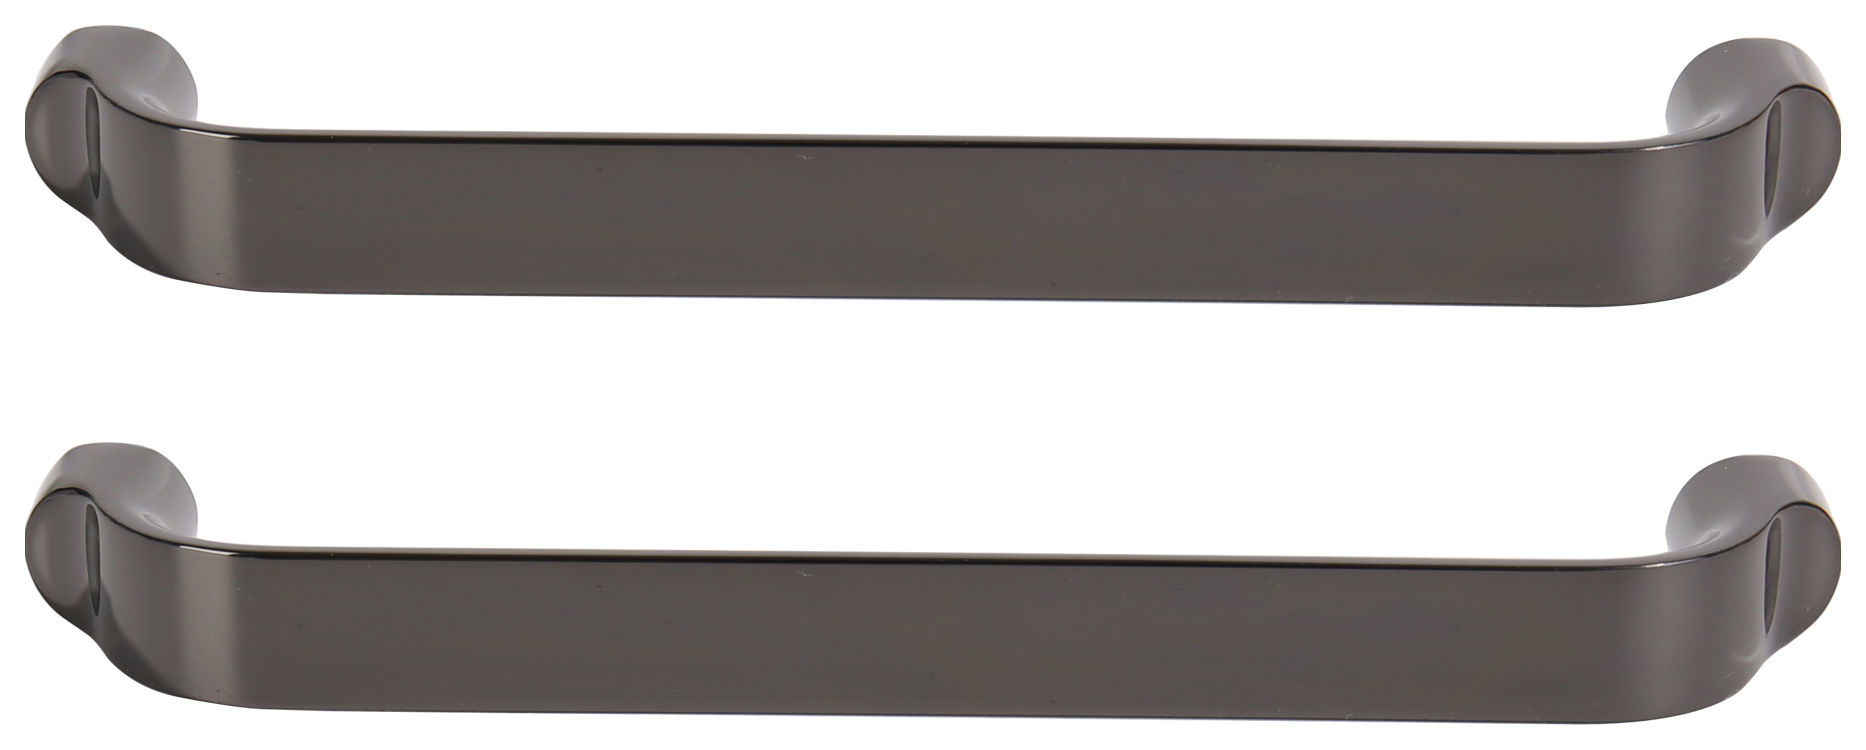 Image of Straight Cabinet Handle Black Nickel 140mm - Pack of 2